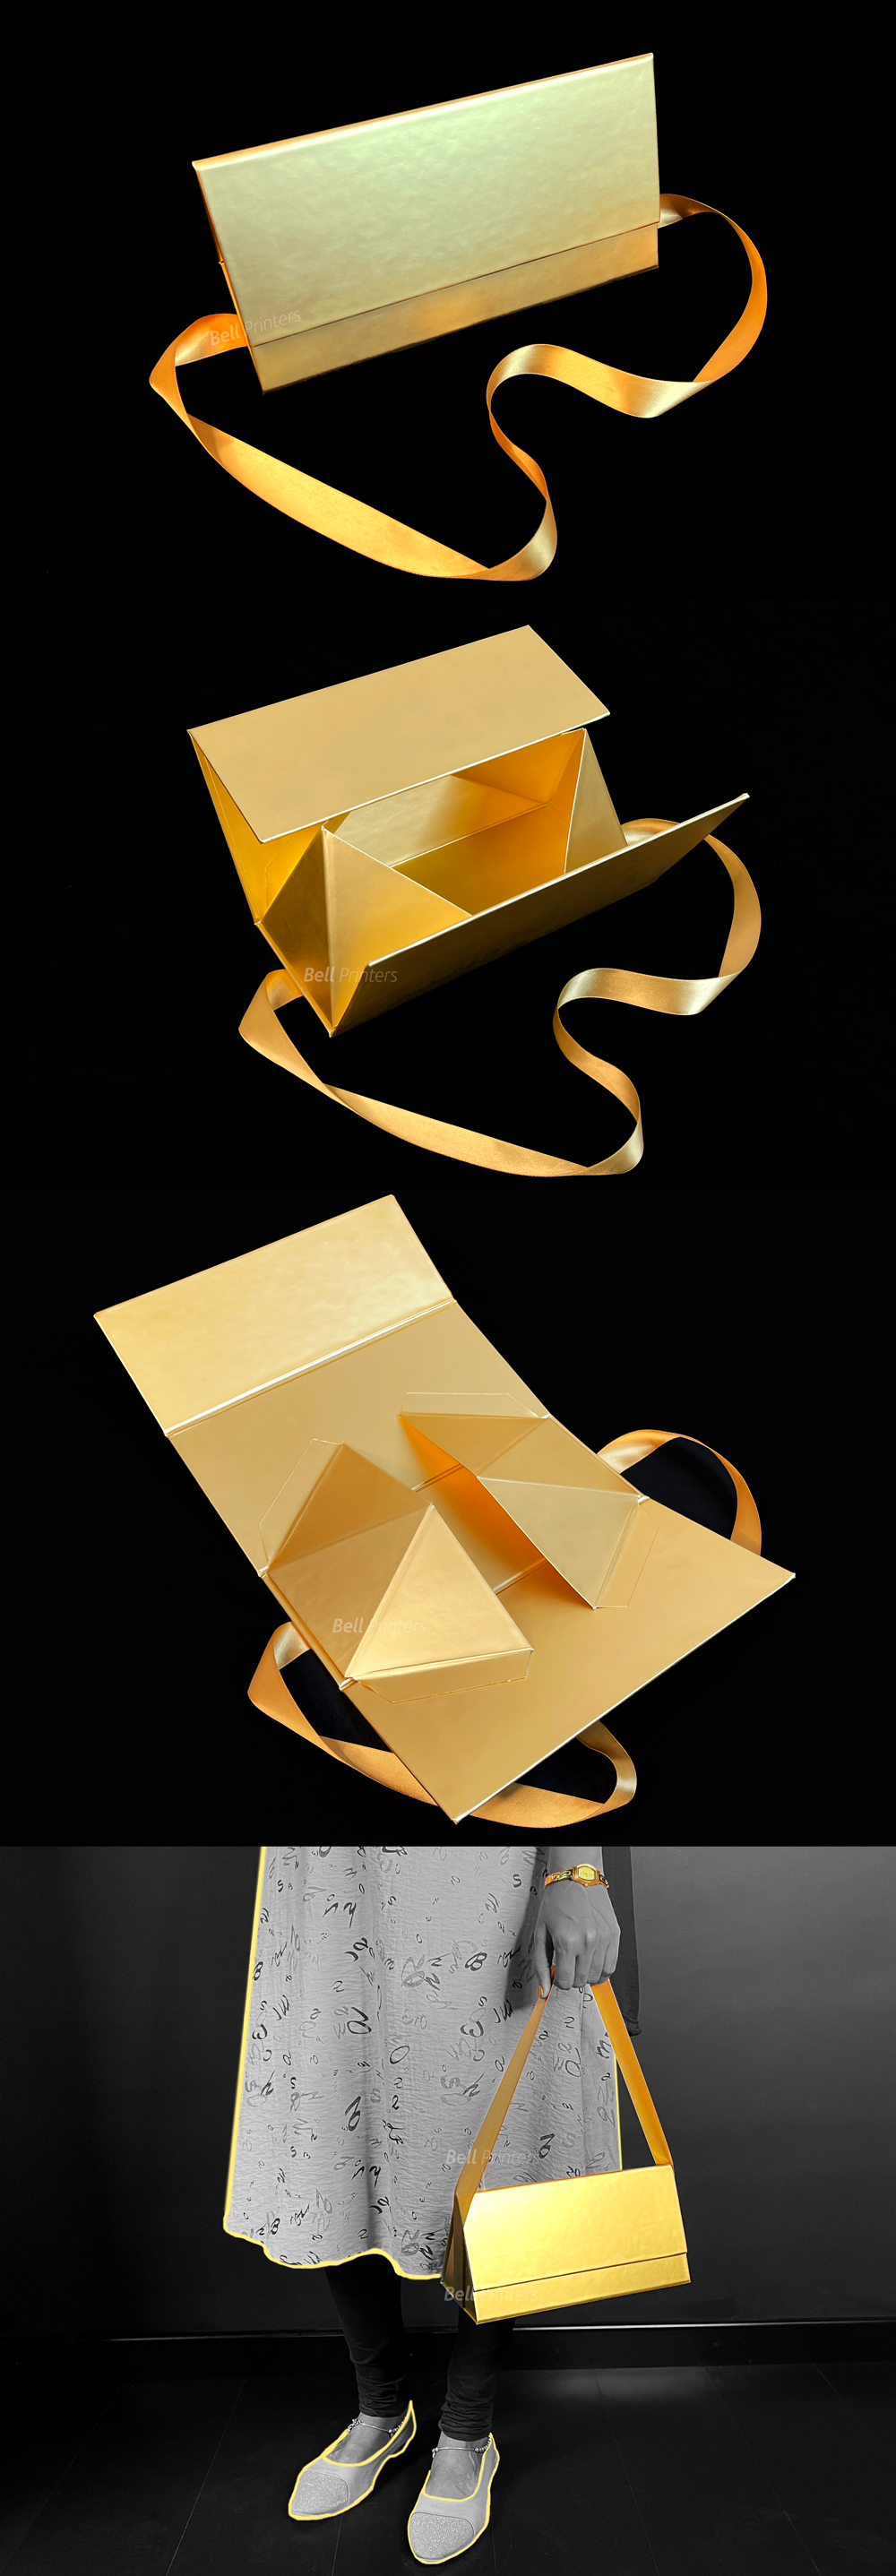  Luxury Triangle handbag Flat fold rigid box